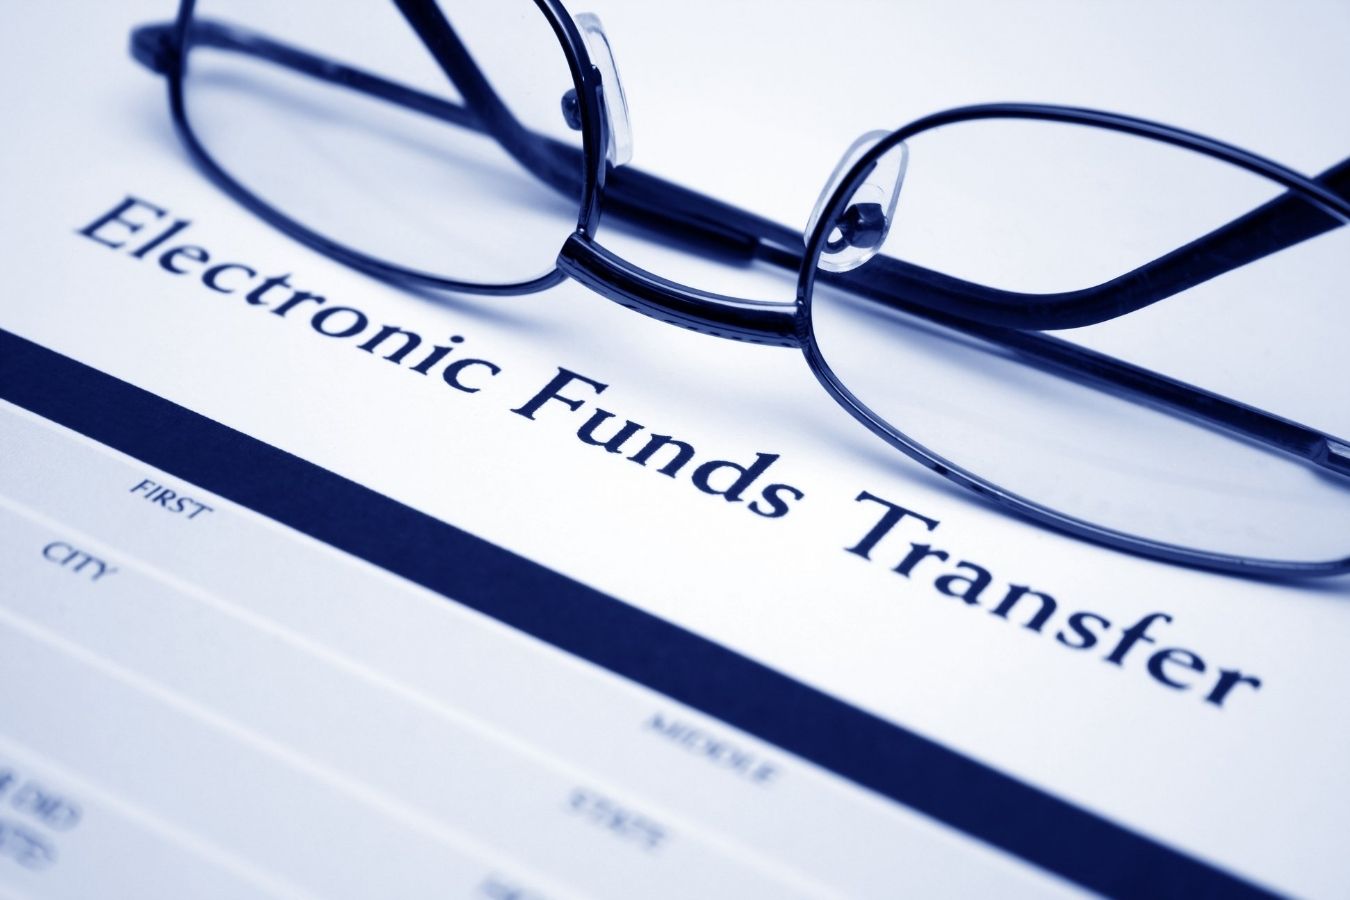 CUB Electronic Fund Transfer